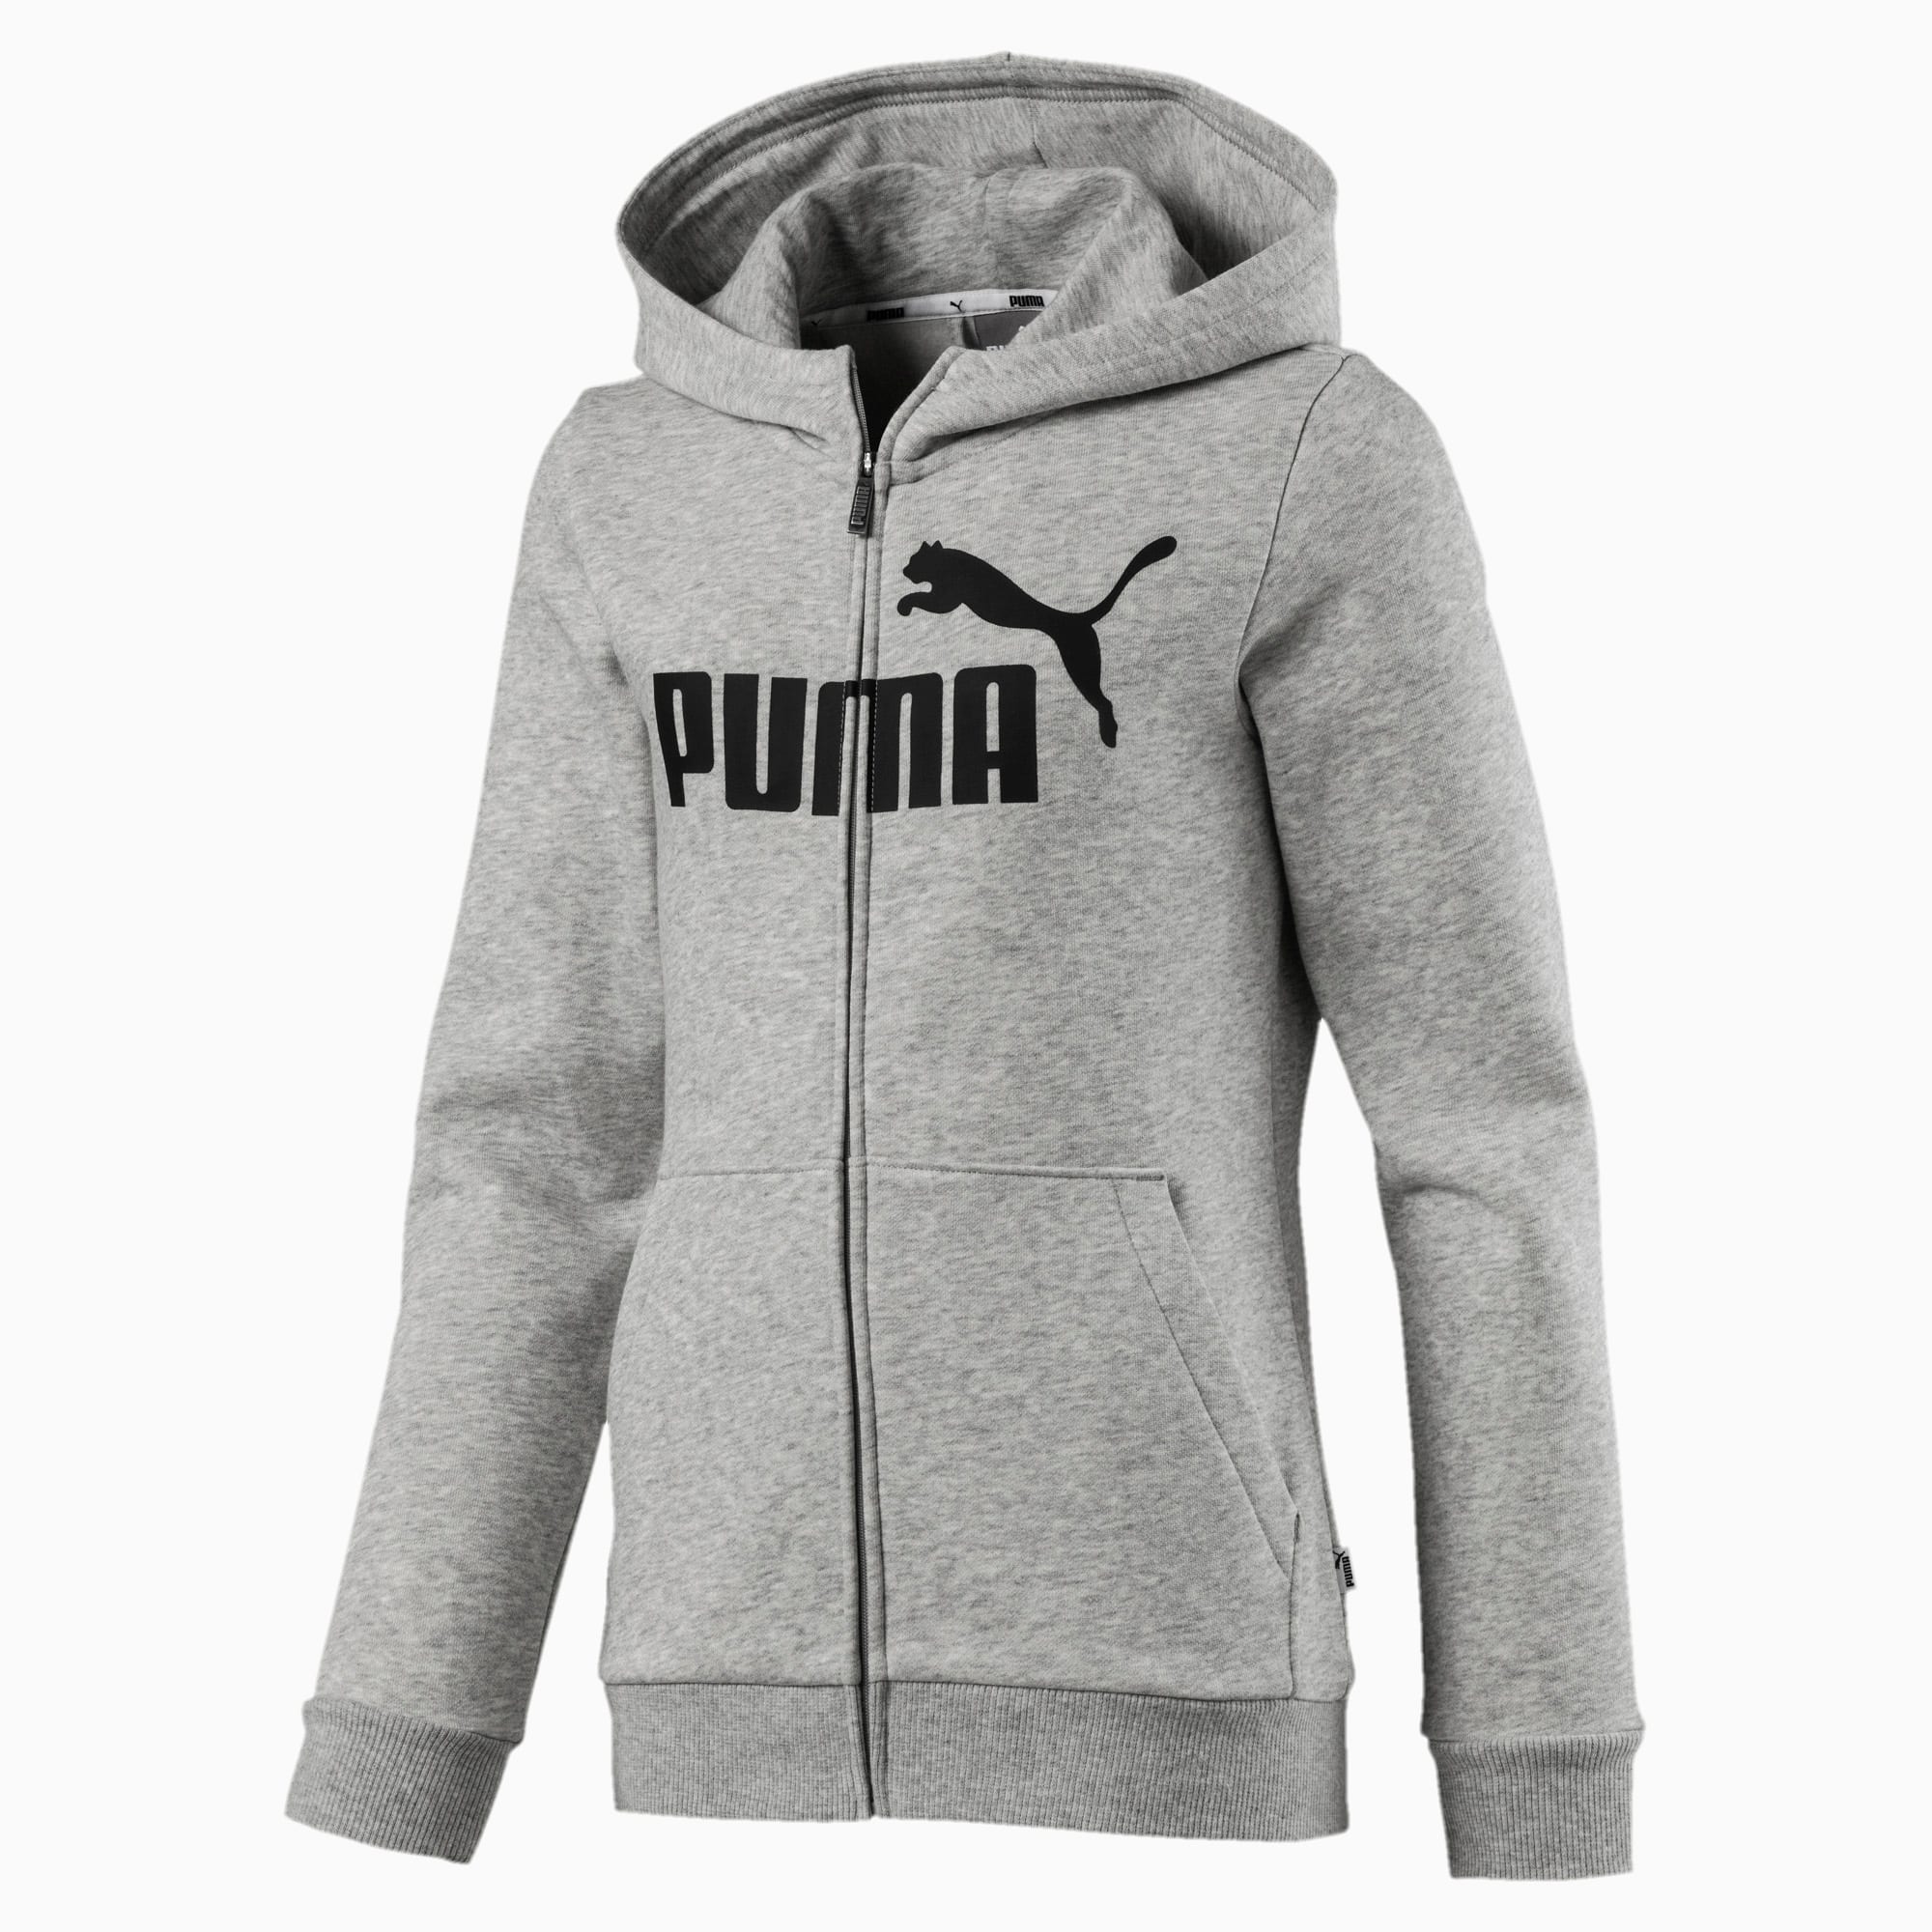 puma jackets for girls